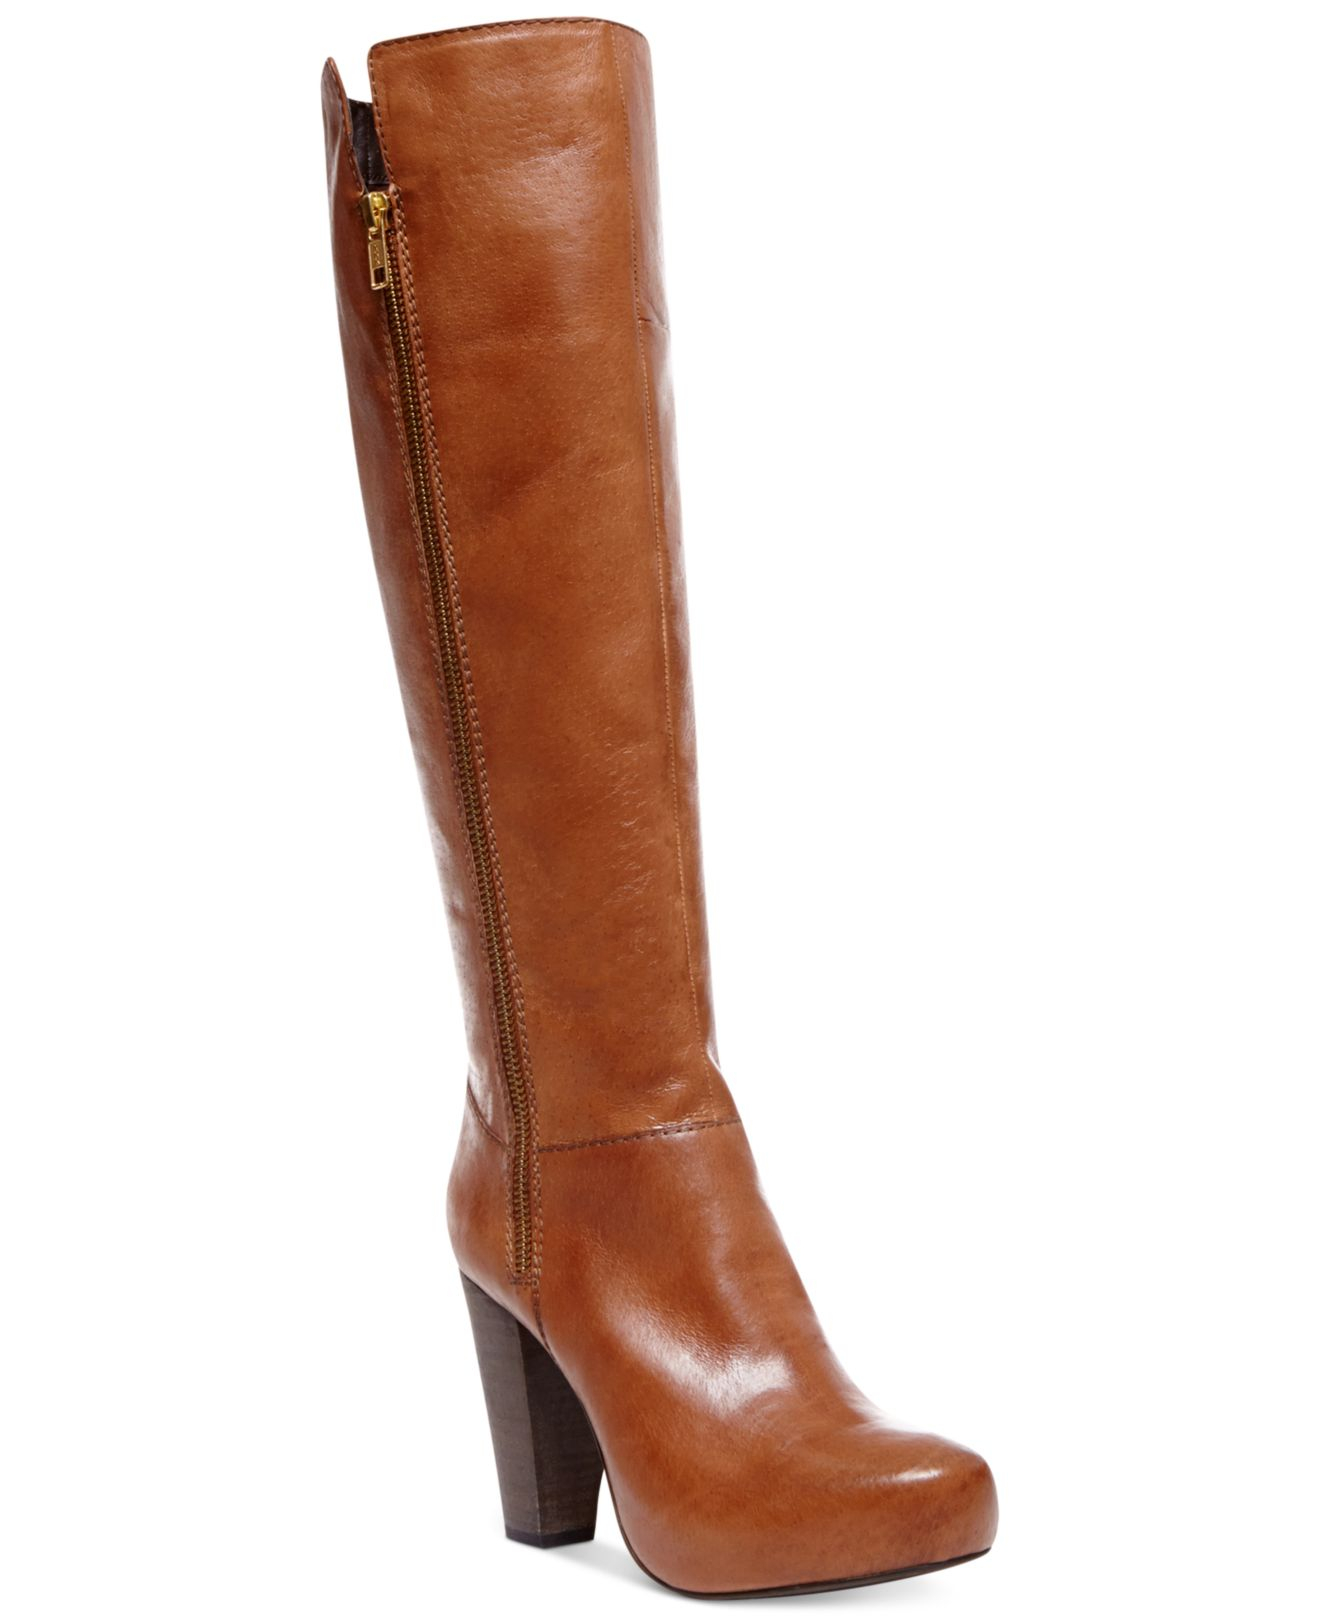 Lyst - Steve madden Women'S Rikki Tall Boots in Brown